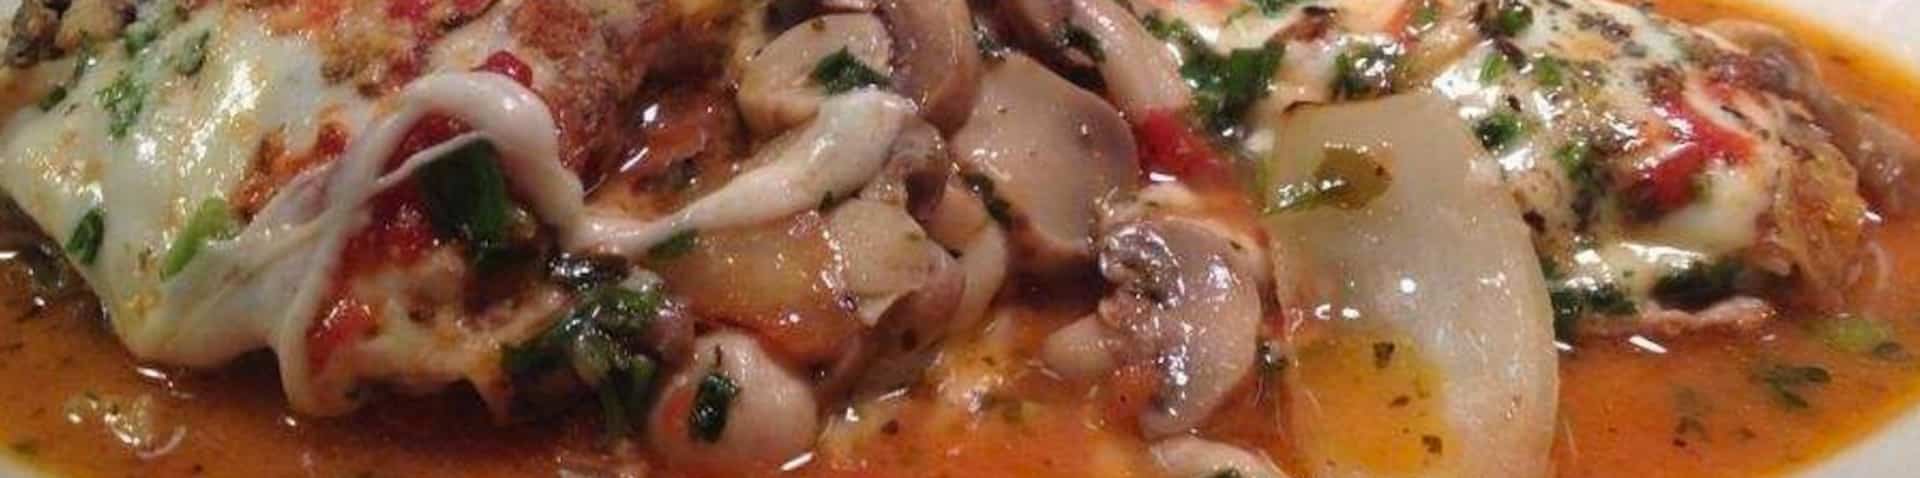 Italian dish with sauce